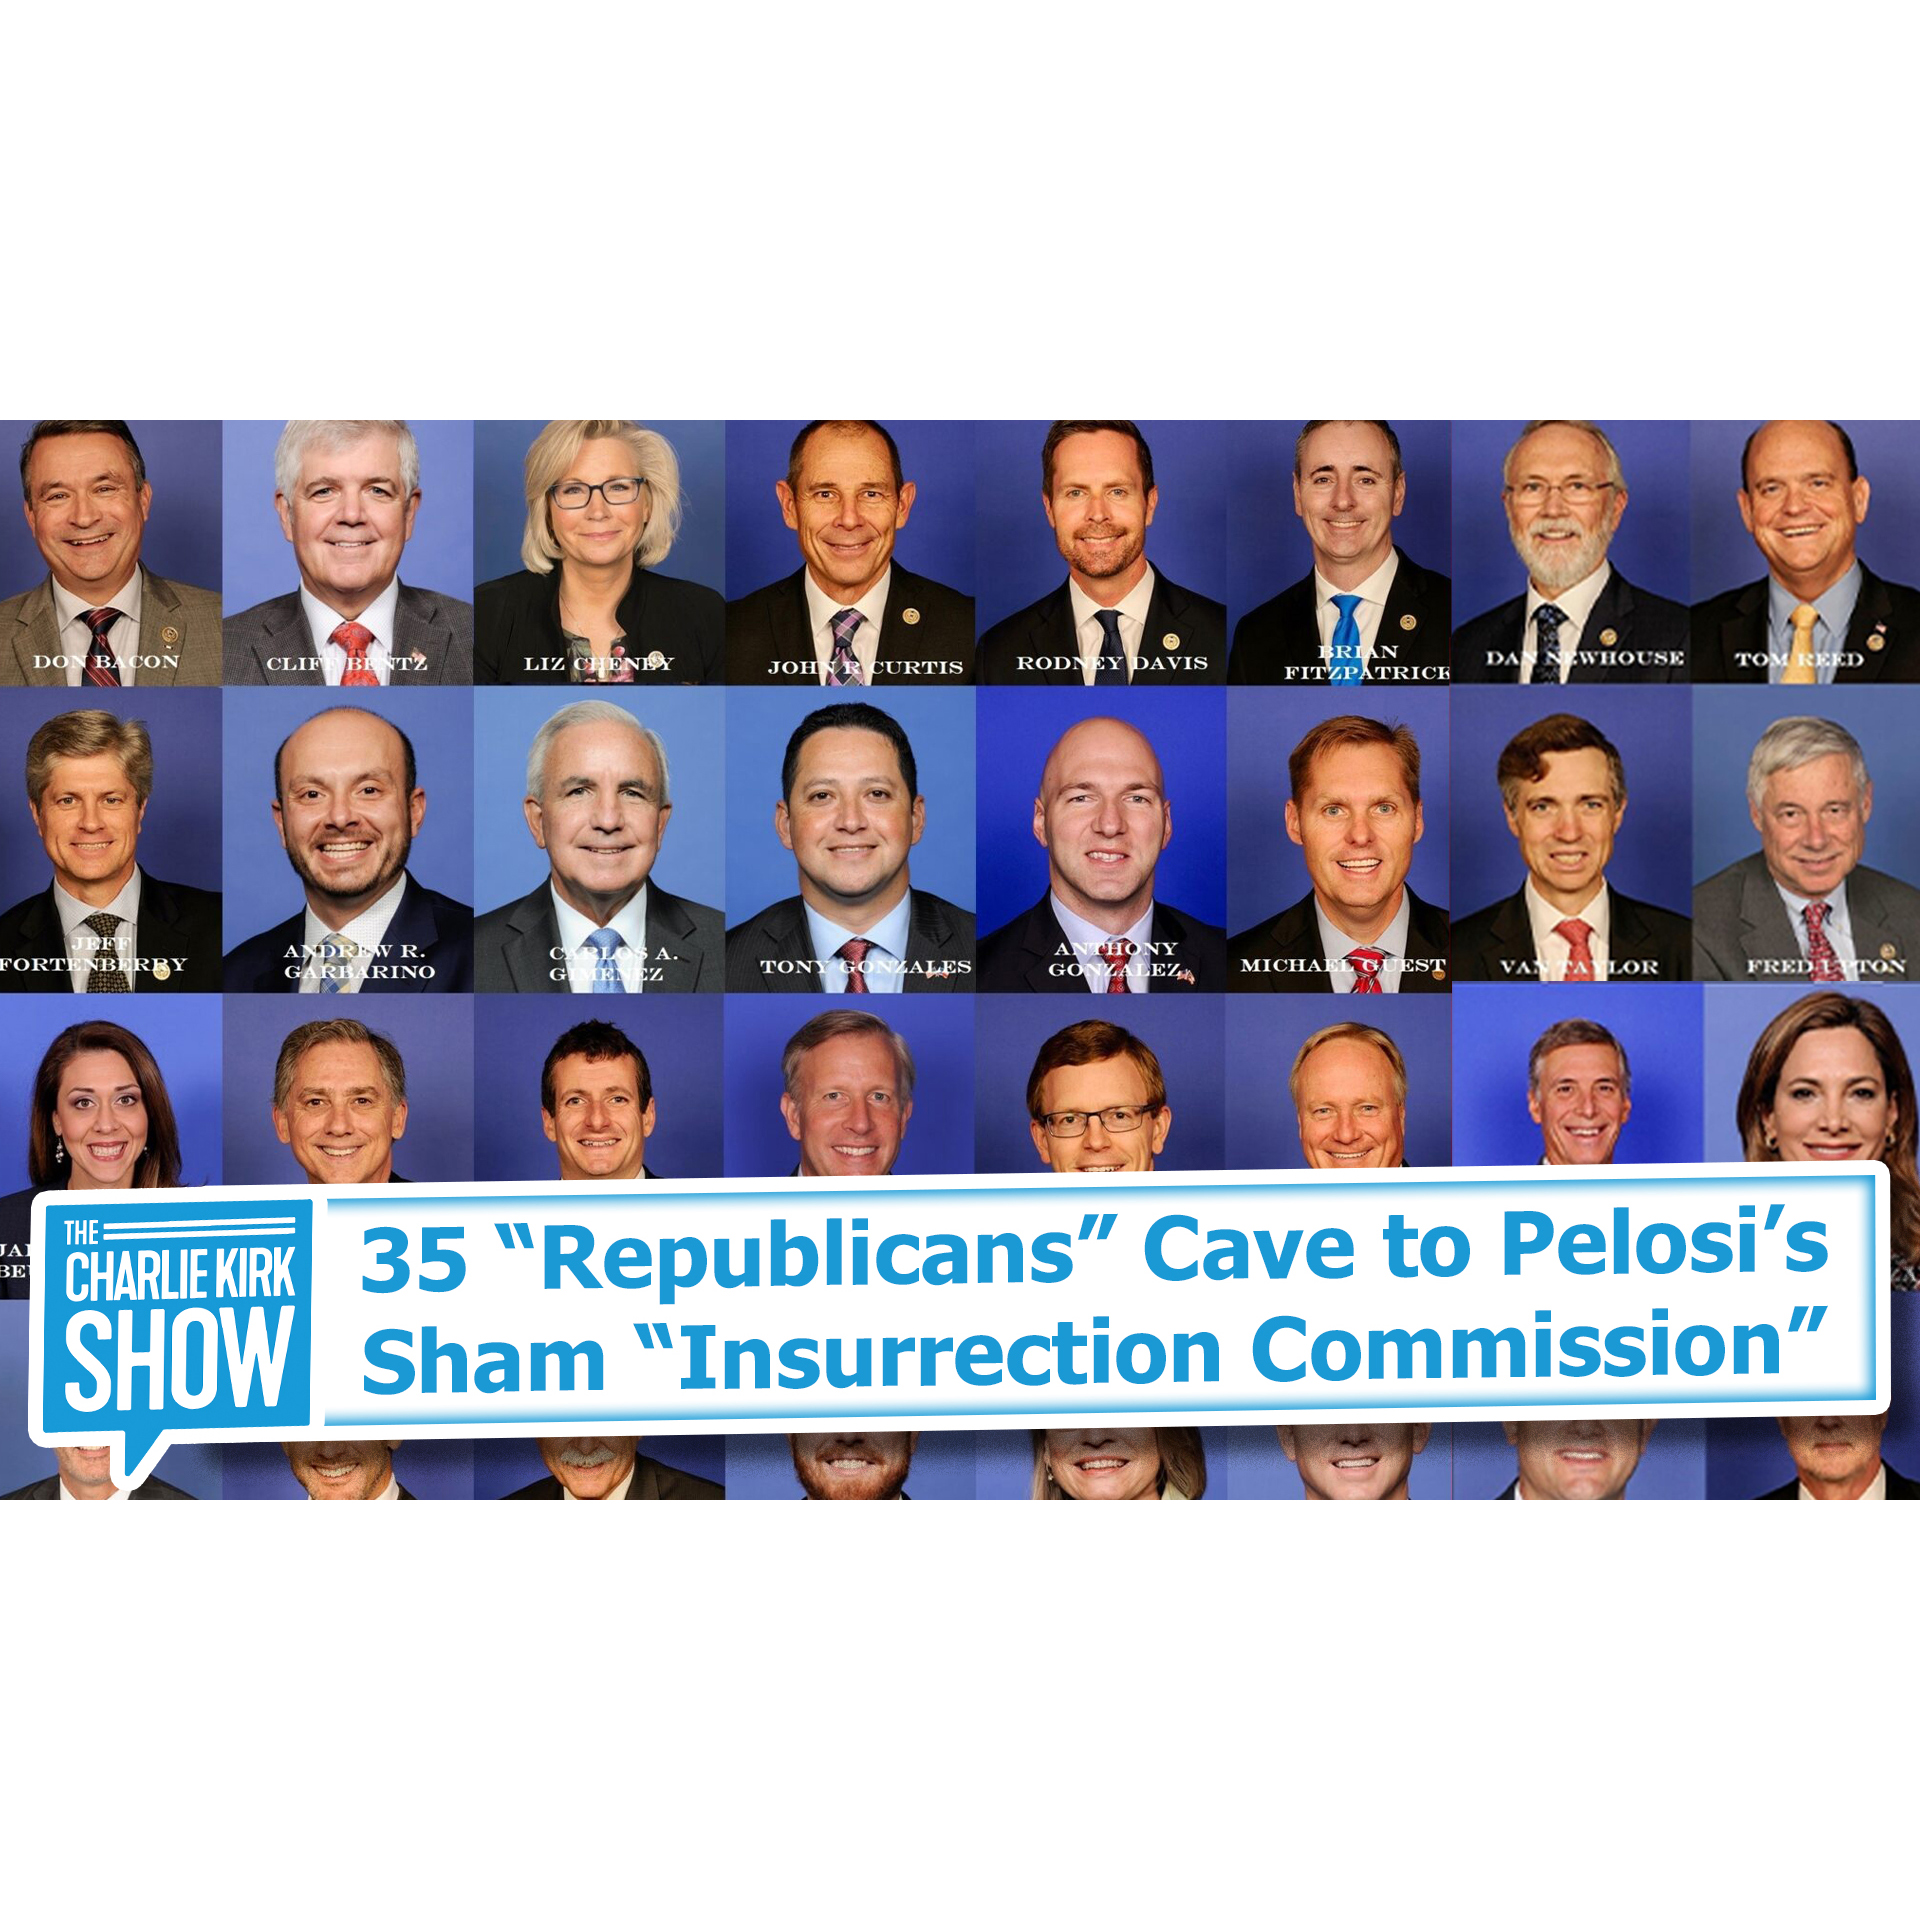 35 “Republicans” Cave to Pelosi’s Sham “Insurrection Commission”